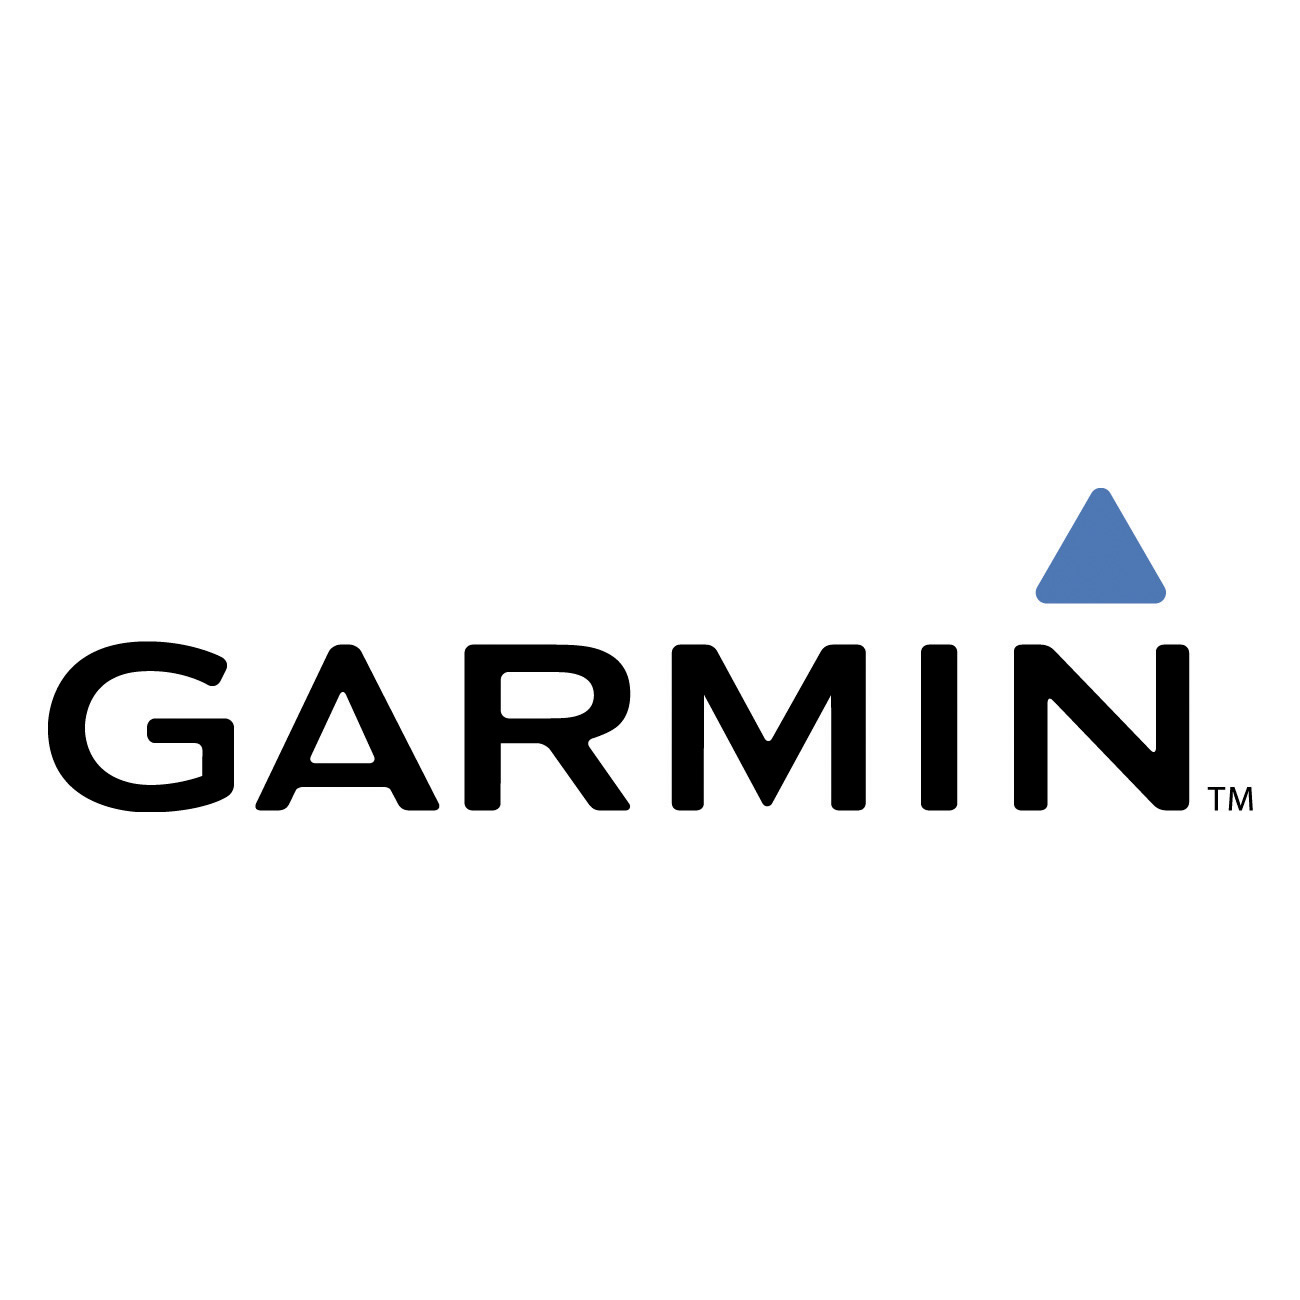 gamin Logo photo - 1